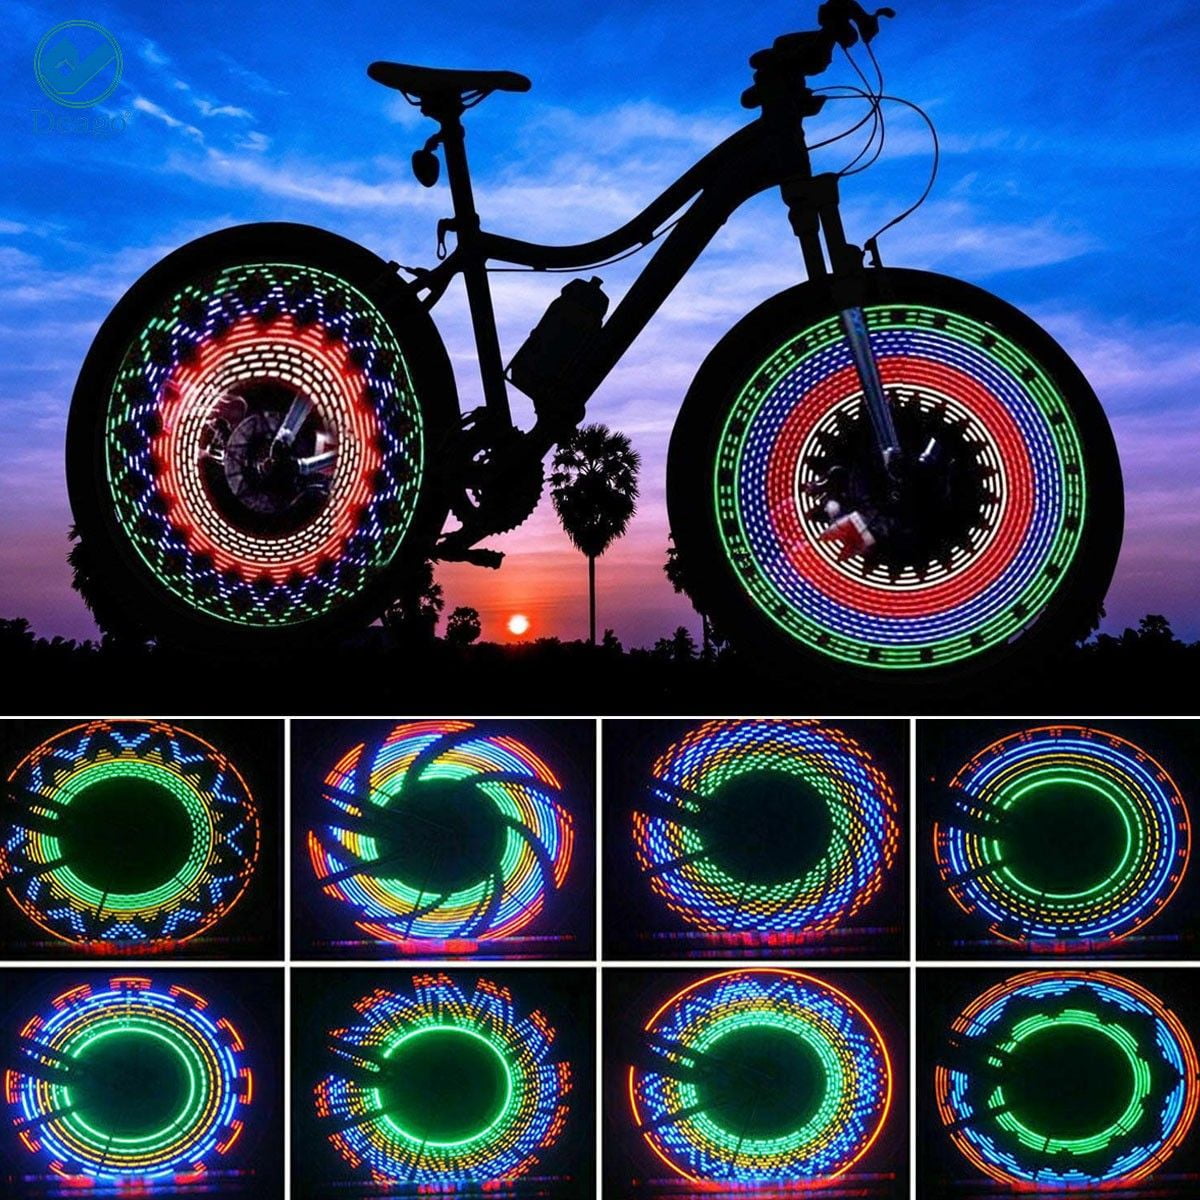 Colorful 32-LED Bike Light 32 Pattern Bicycle Tire Wheel Spoke Decorative Lamp Colorful Light Bike Light 